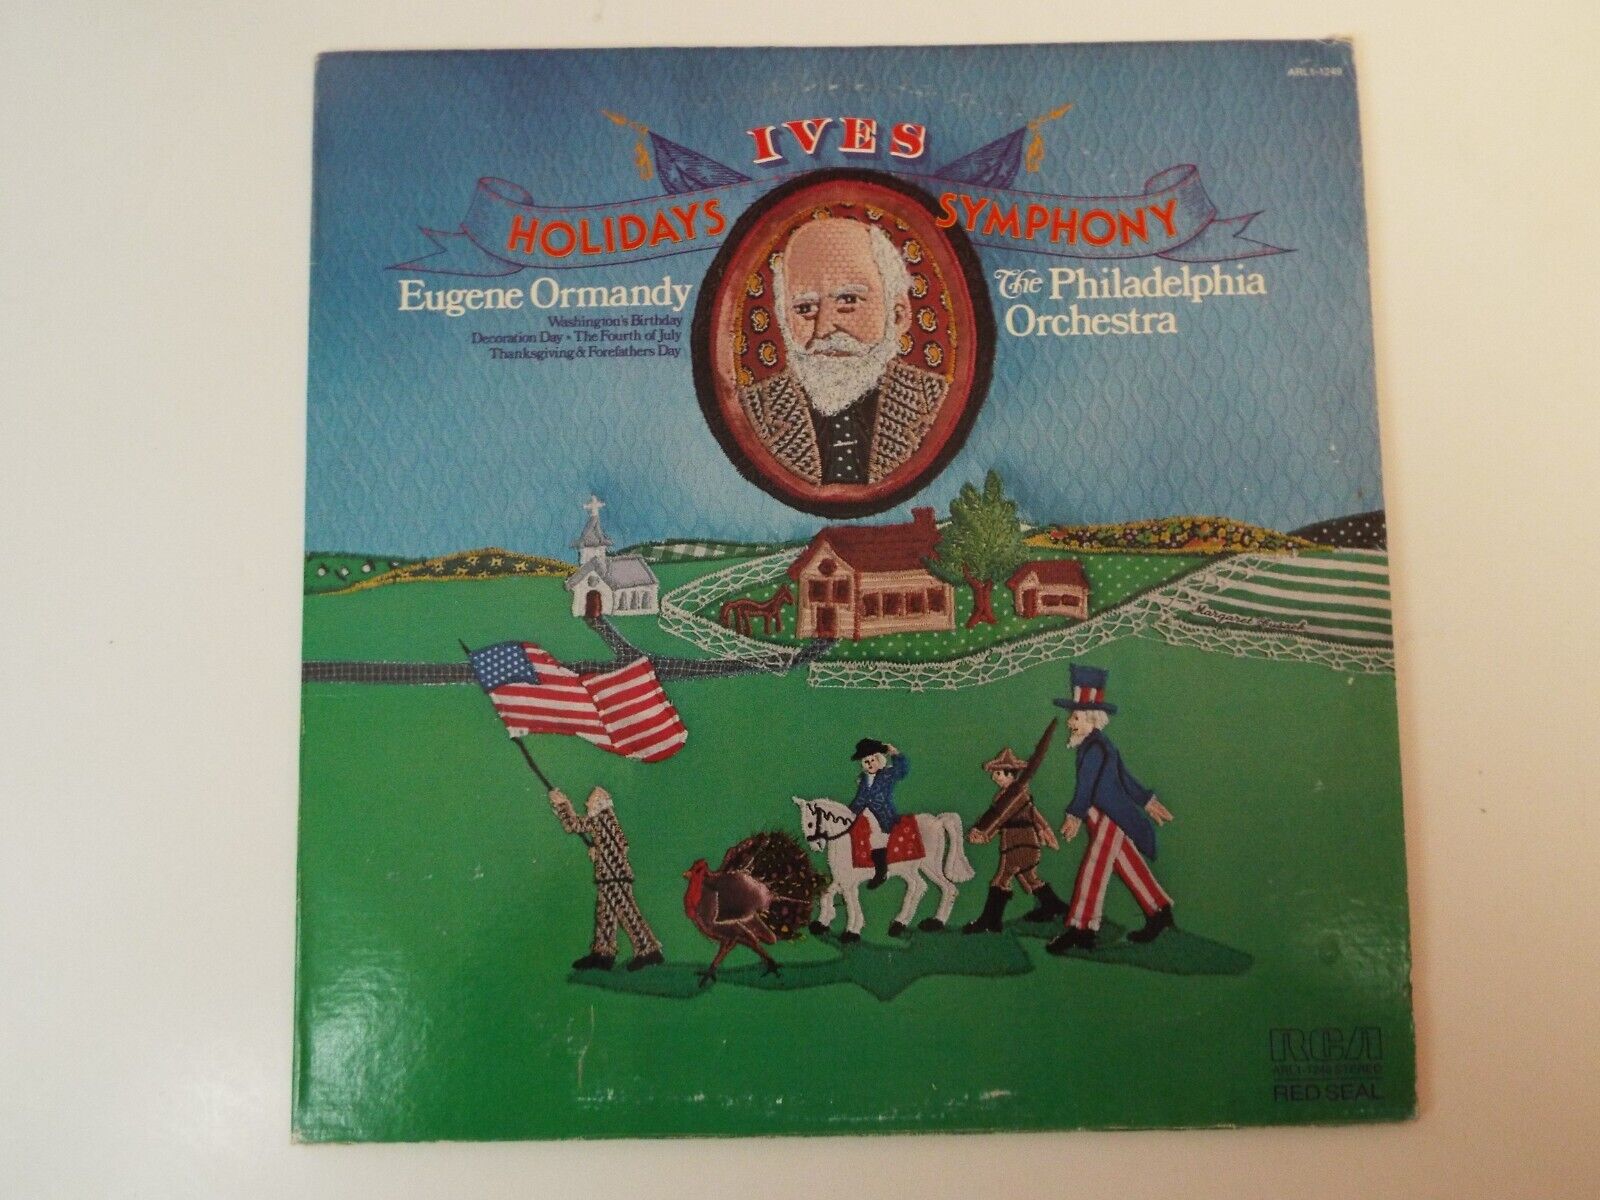 Ives Holidays Symphony Eugene Ormandy and Philidelphia Orchestra LP Album